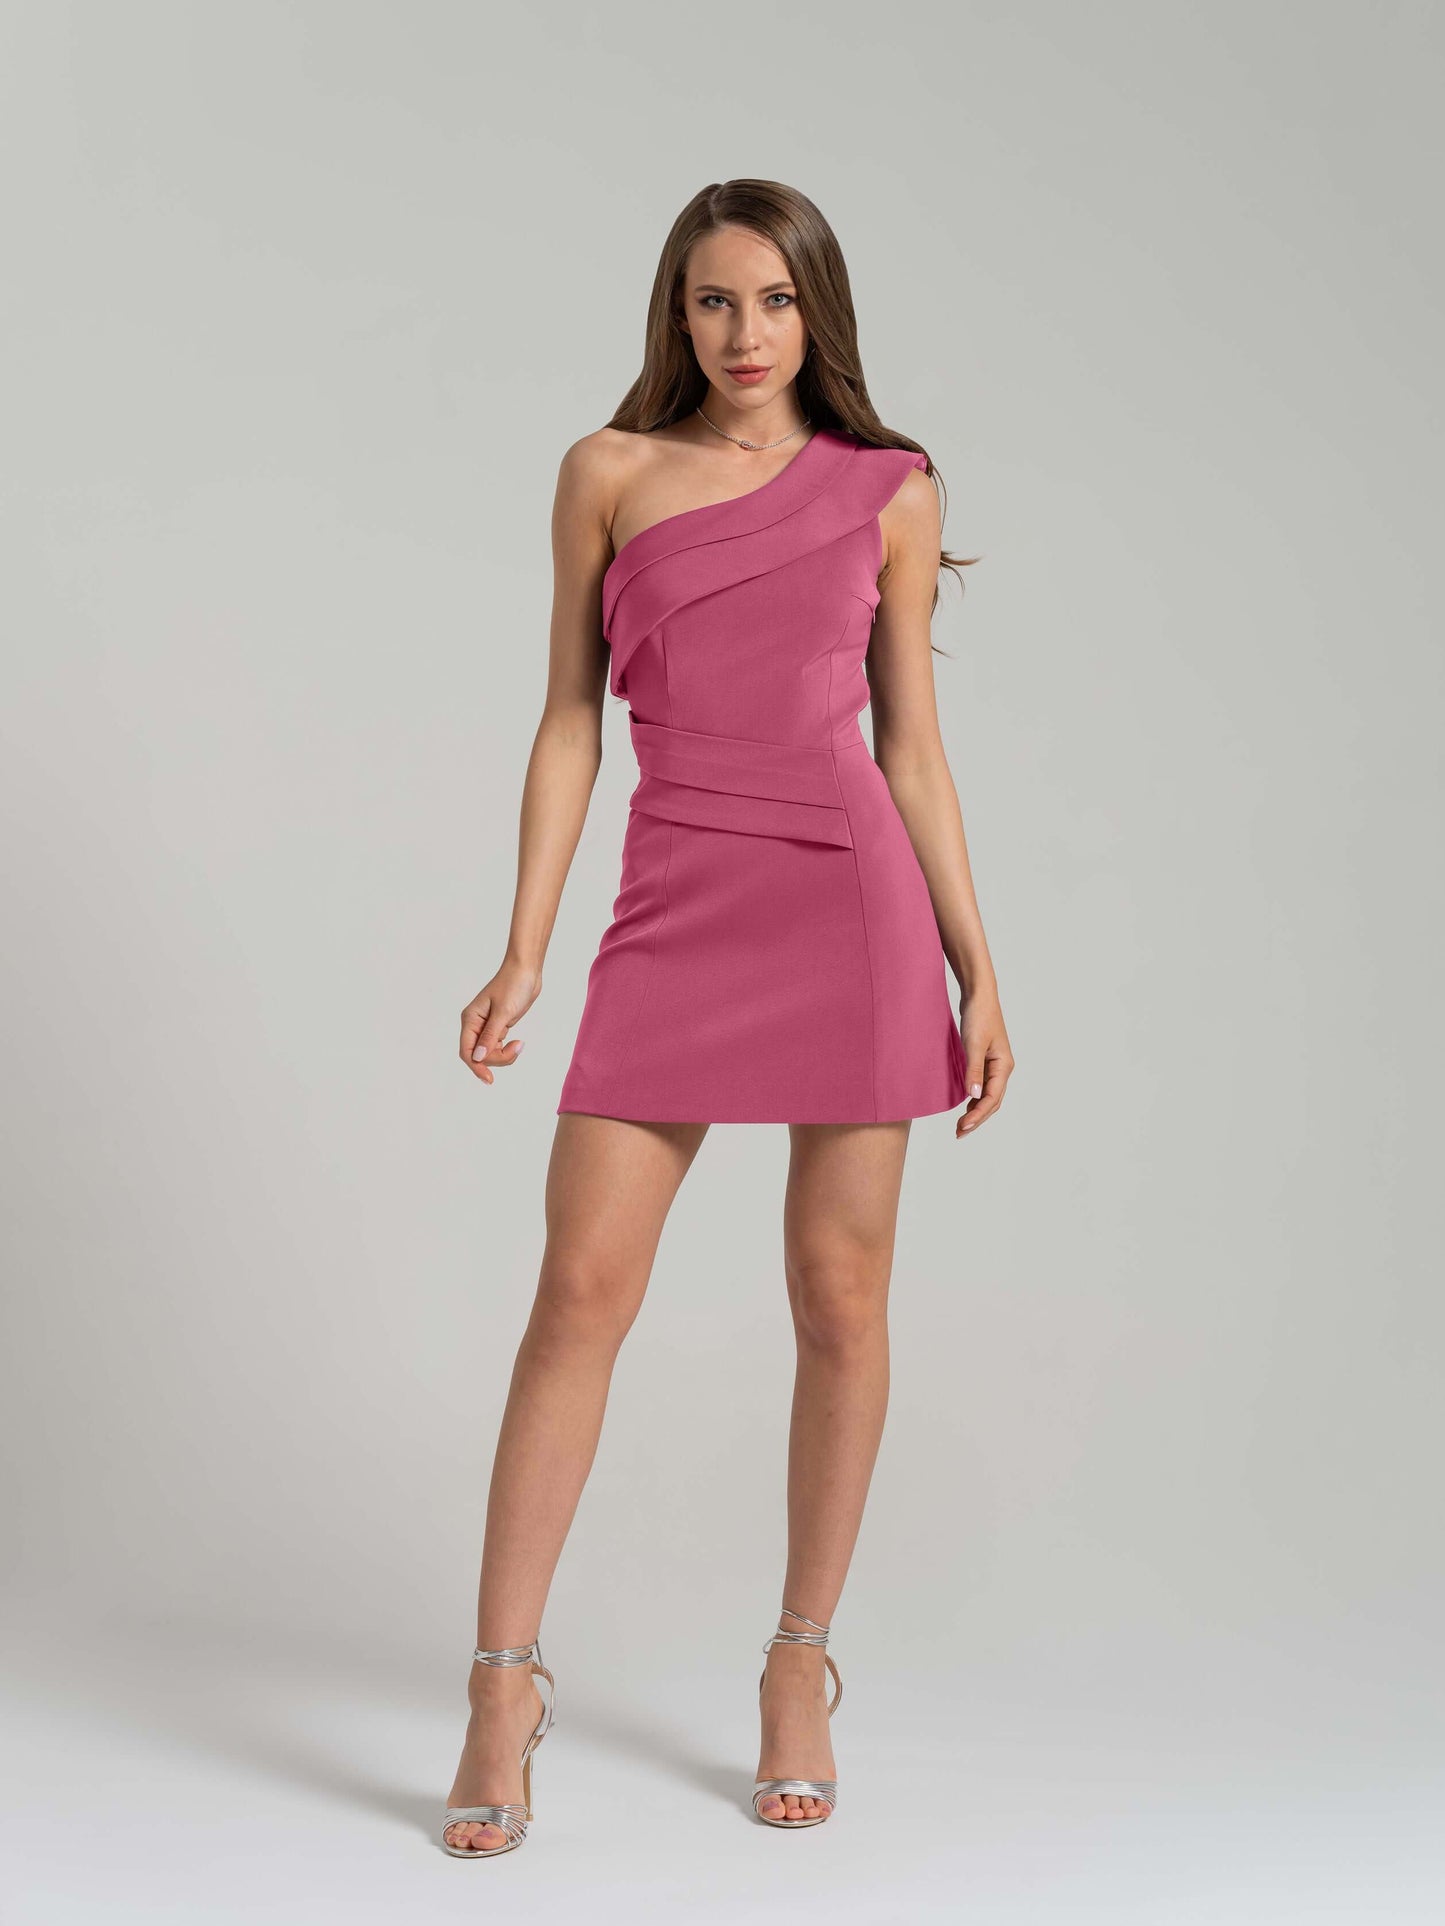 Elegant Touch One-Shoulder Mini Dress - Super Pink